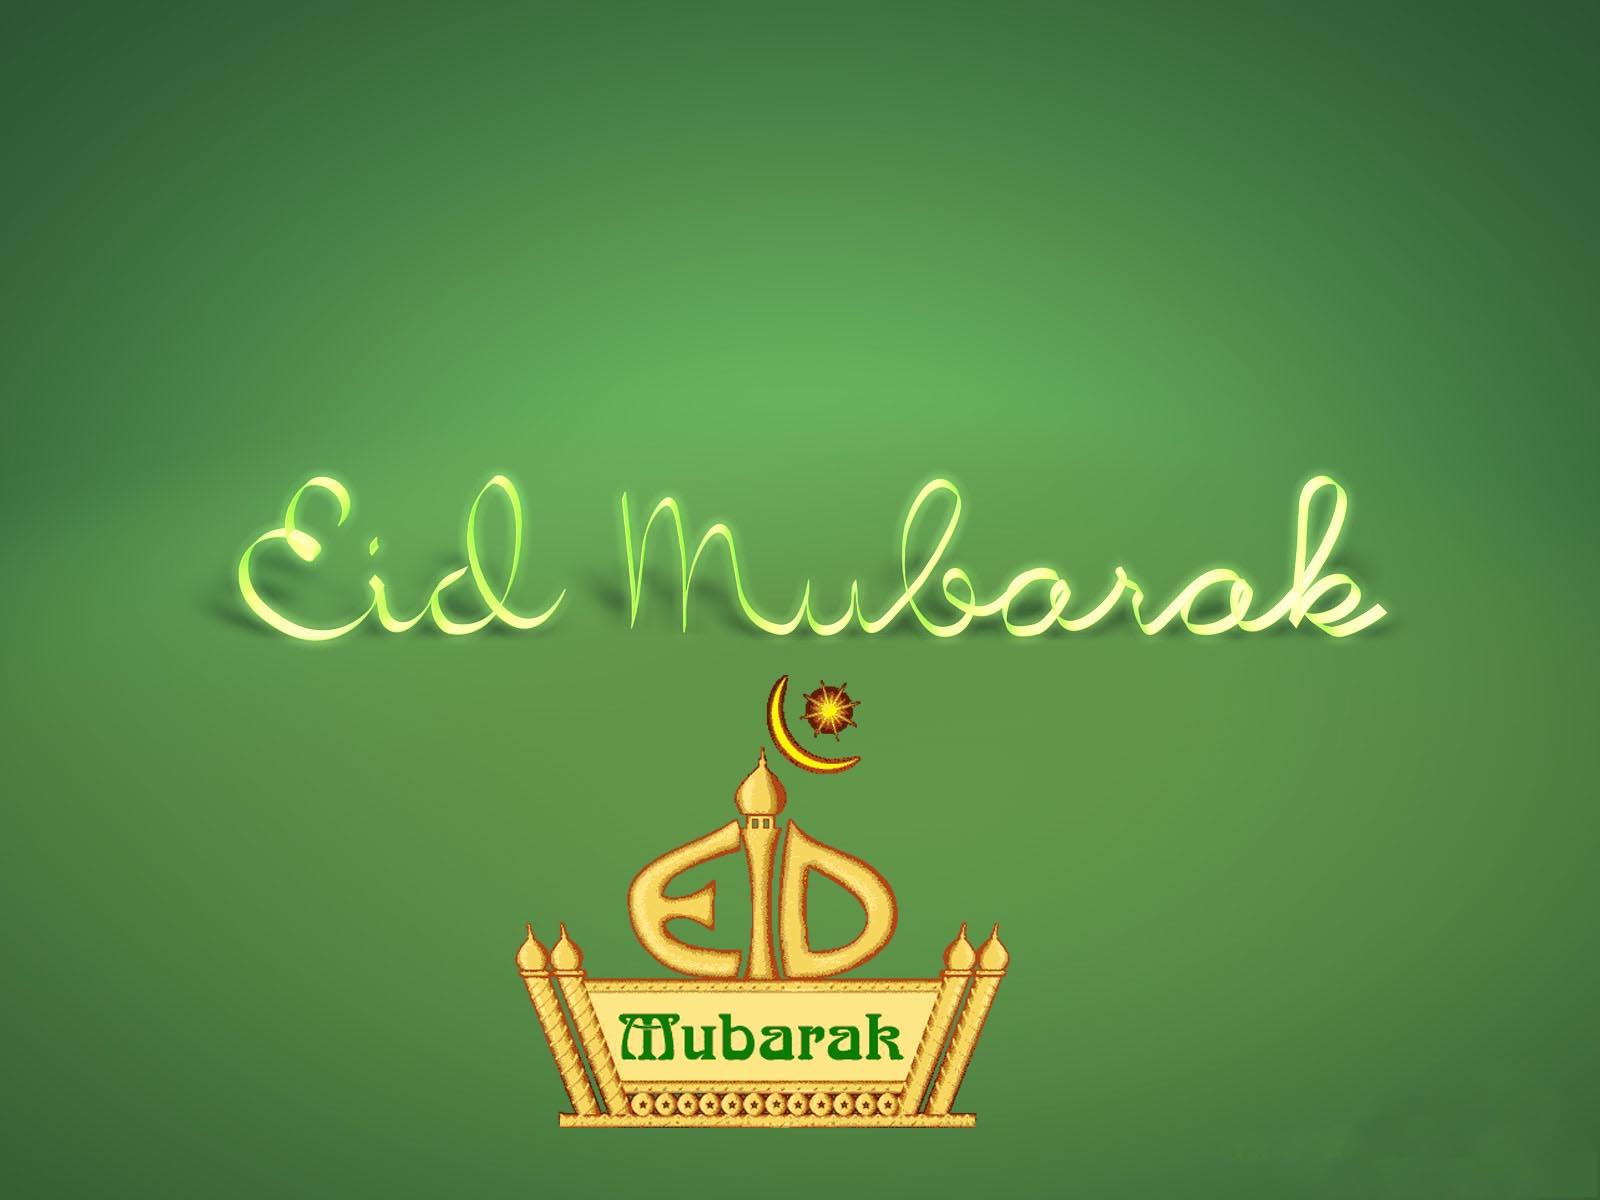 Eid Mubarak Whatsapp profile dp